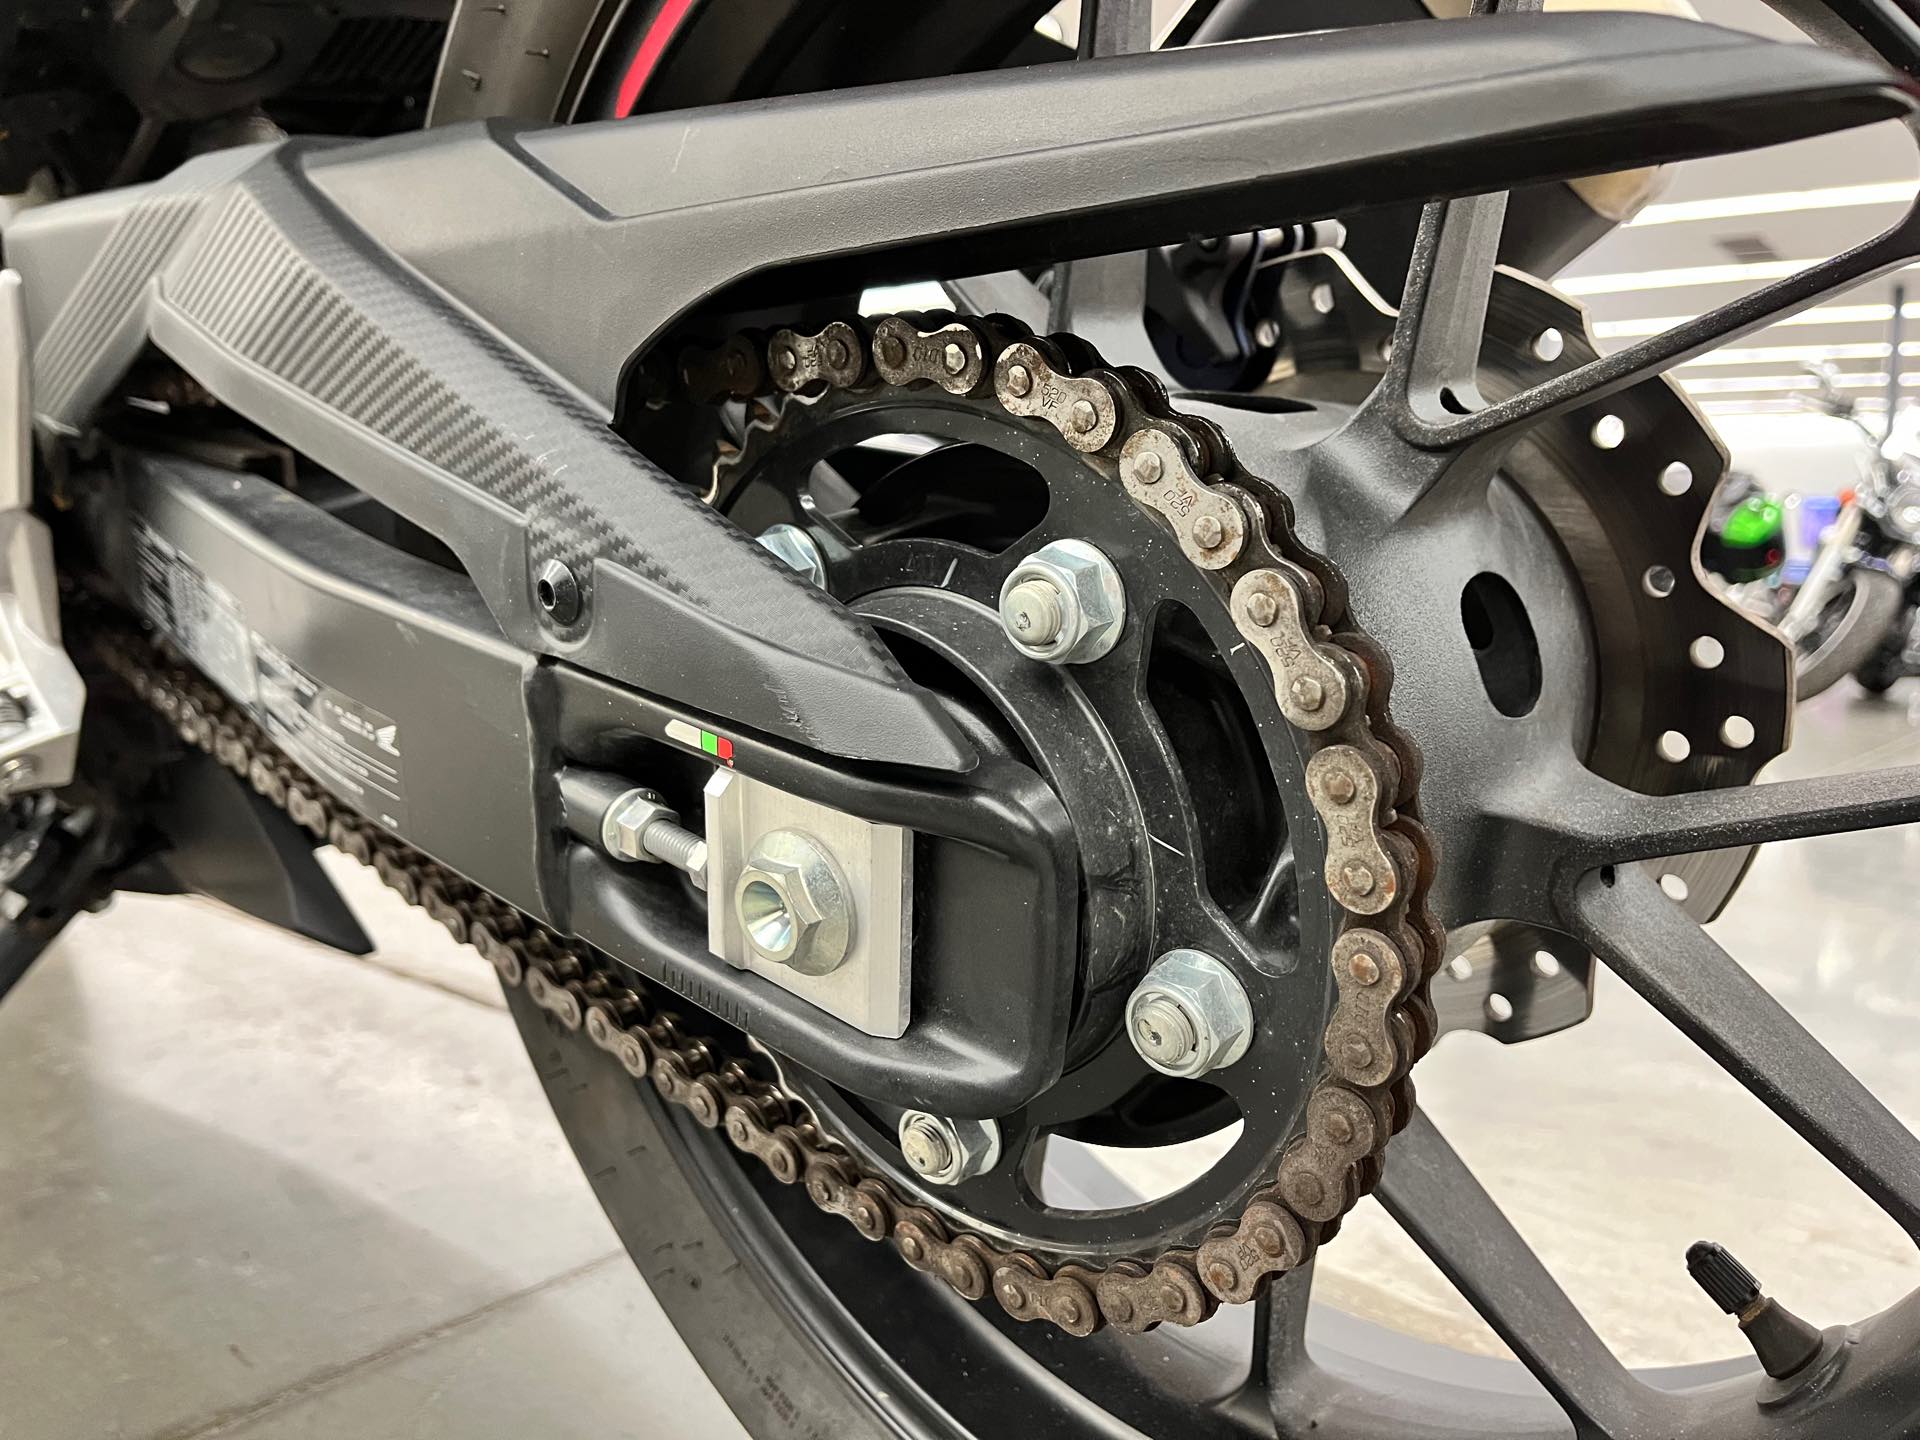 2020 Honda CBR500R ABS at Aces Motorcycles - Denver